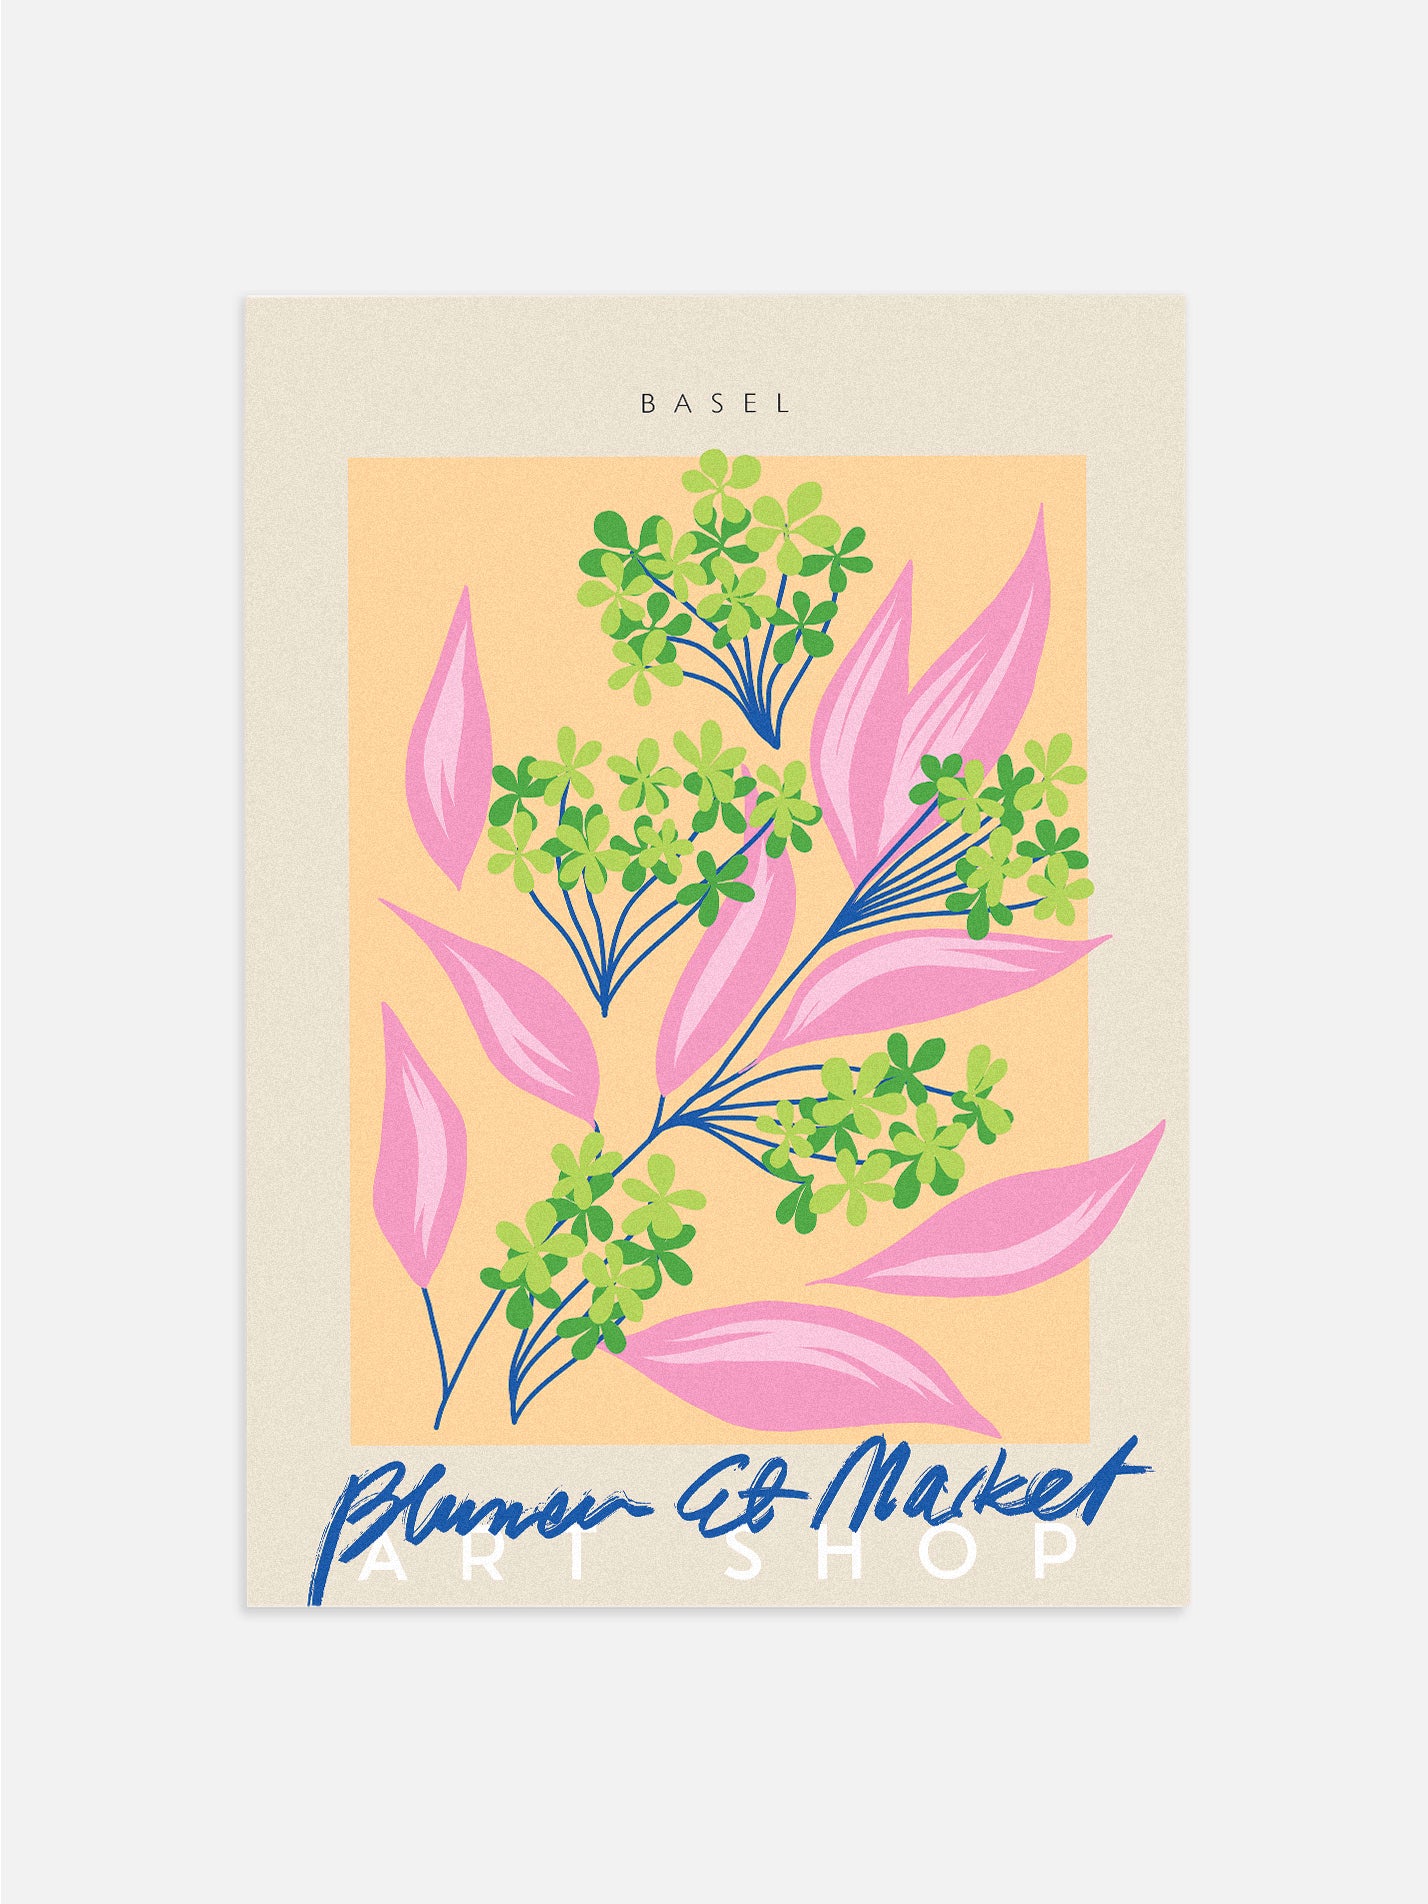 Basel Flower Market